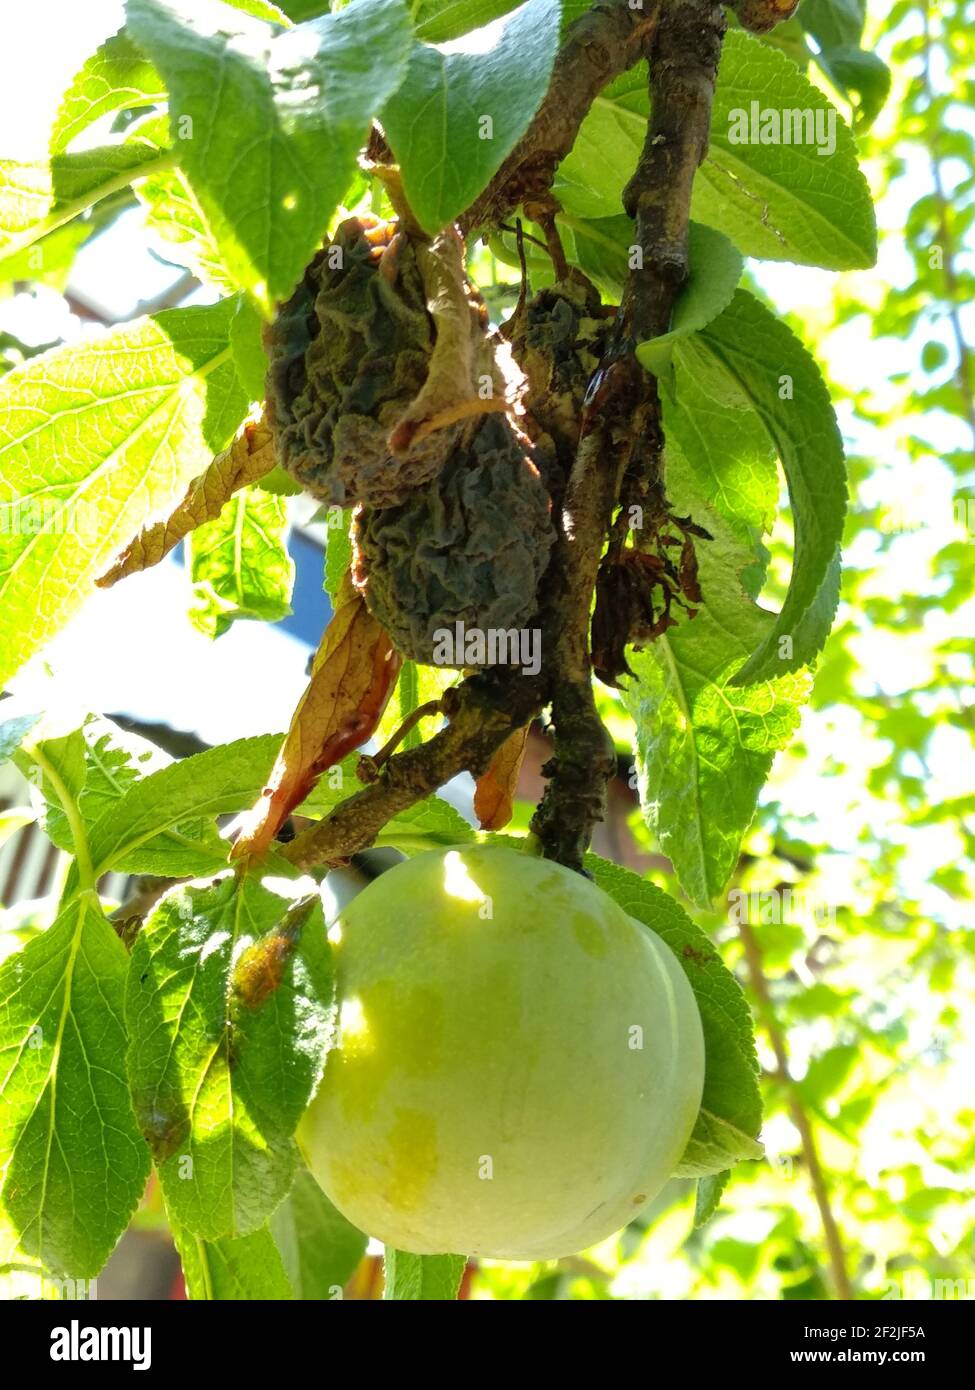 Rotten fruits on the tree Stock Photo